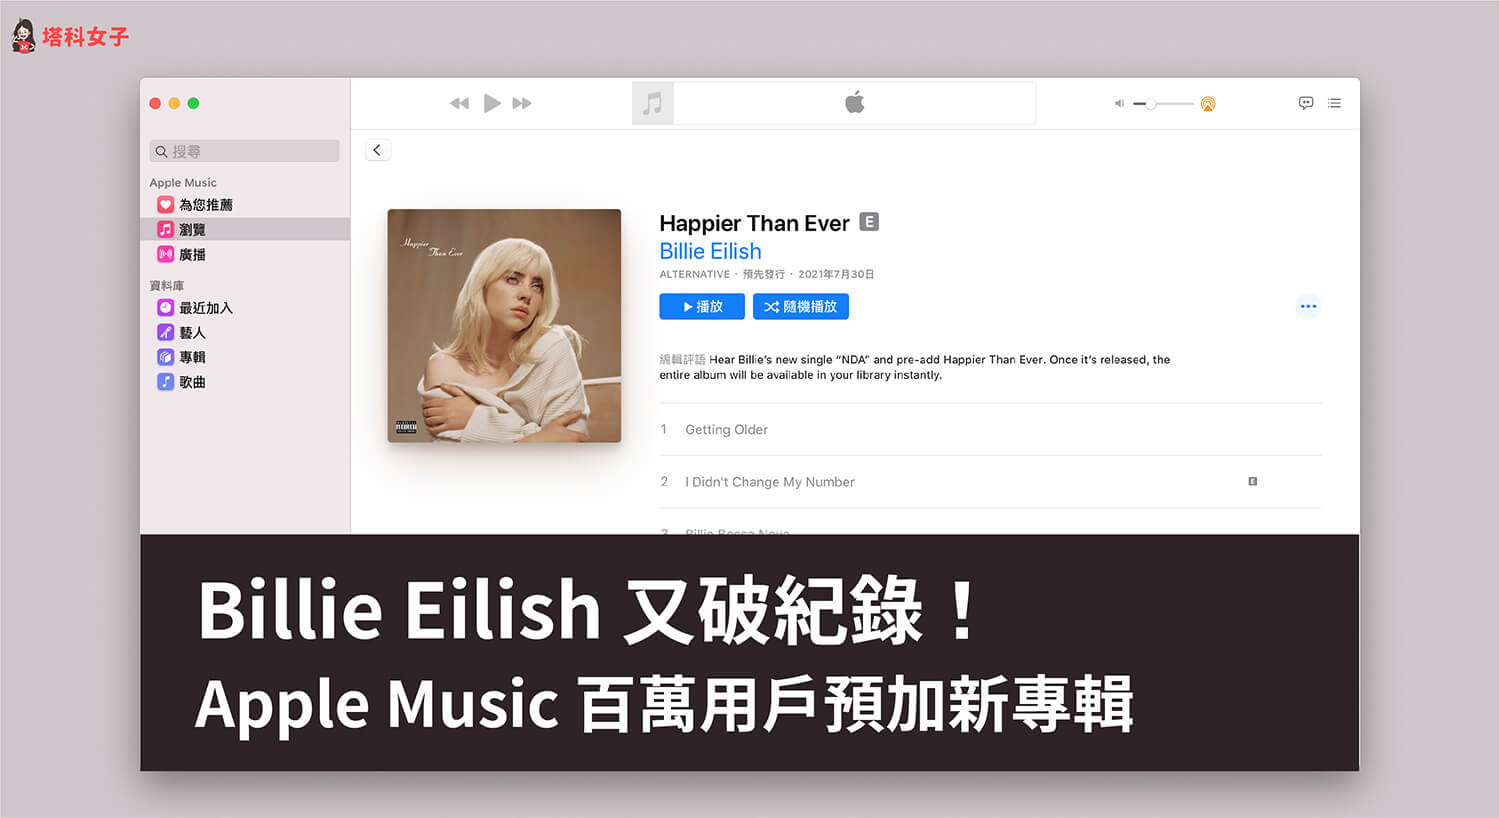 Billie Eilish 又破紀錄！Apple Music 超過百萬用戶預先加入全新專輯《Happier Than Ever》本週五正式發行